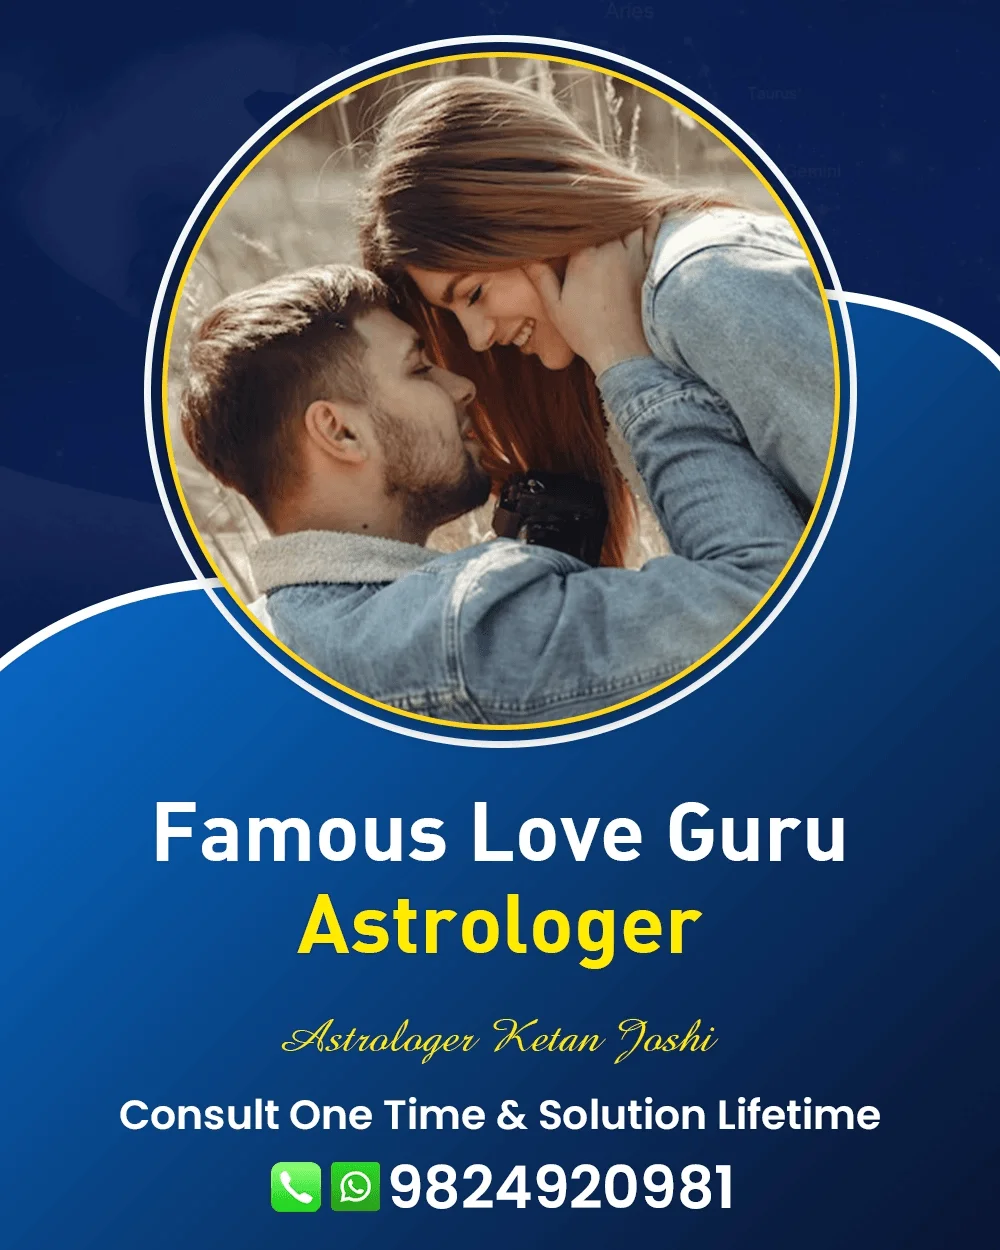 Love Problem Astrologer In Ooty